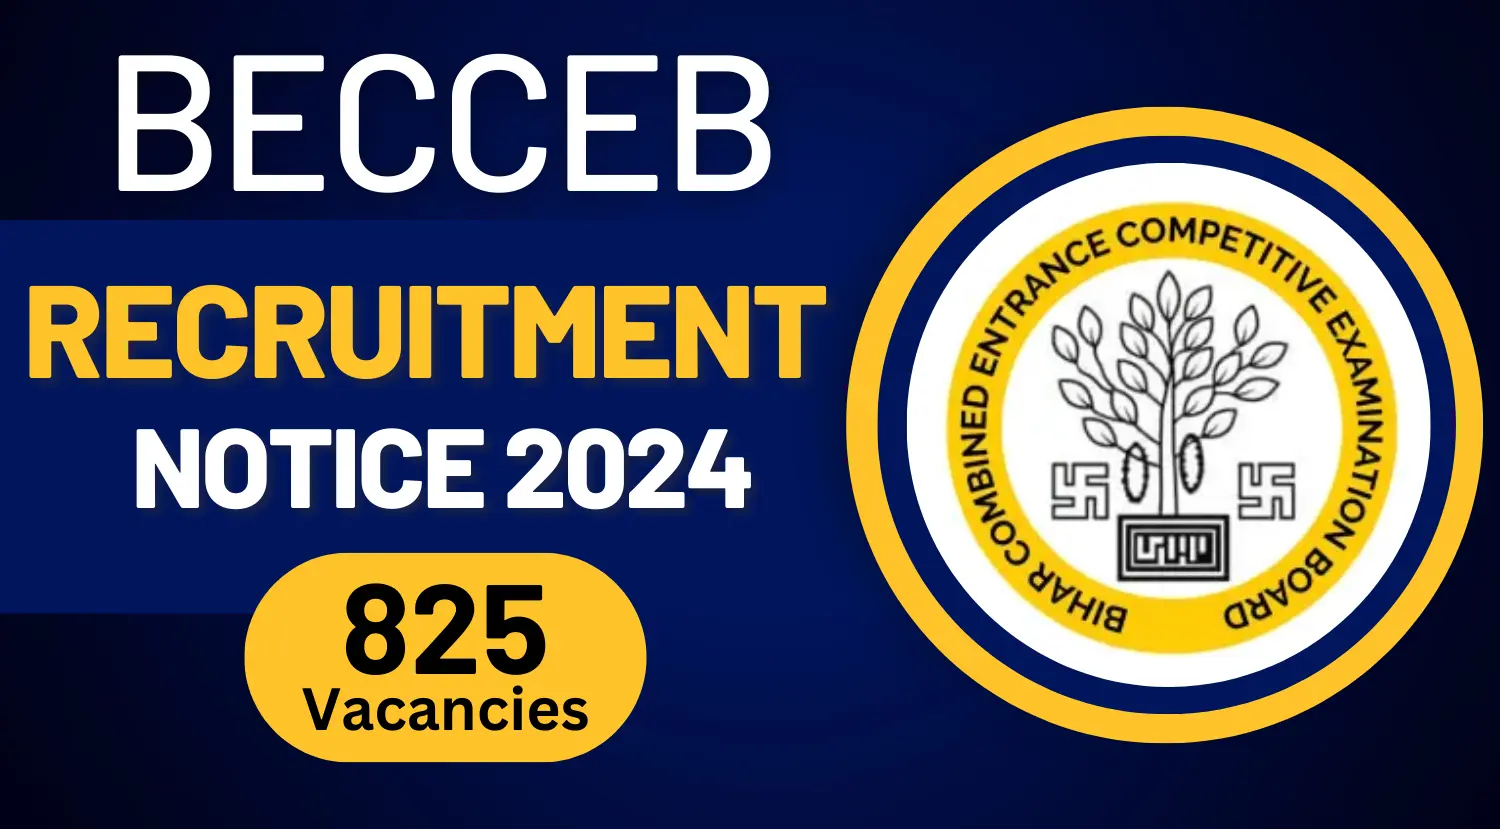 BCECEB 825 Senior ResidentTutor Recruitment 2024